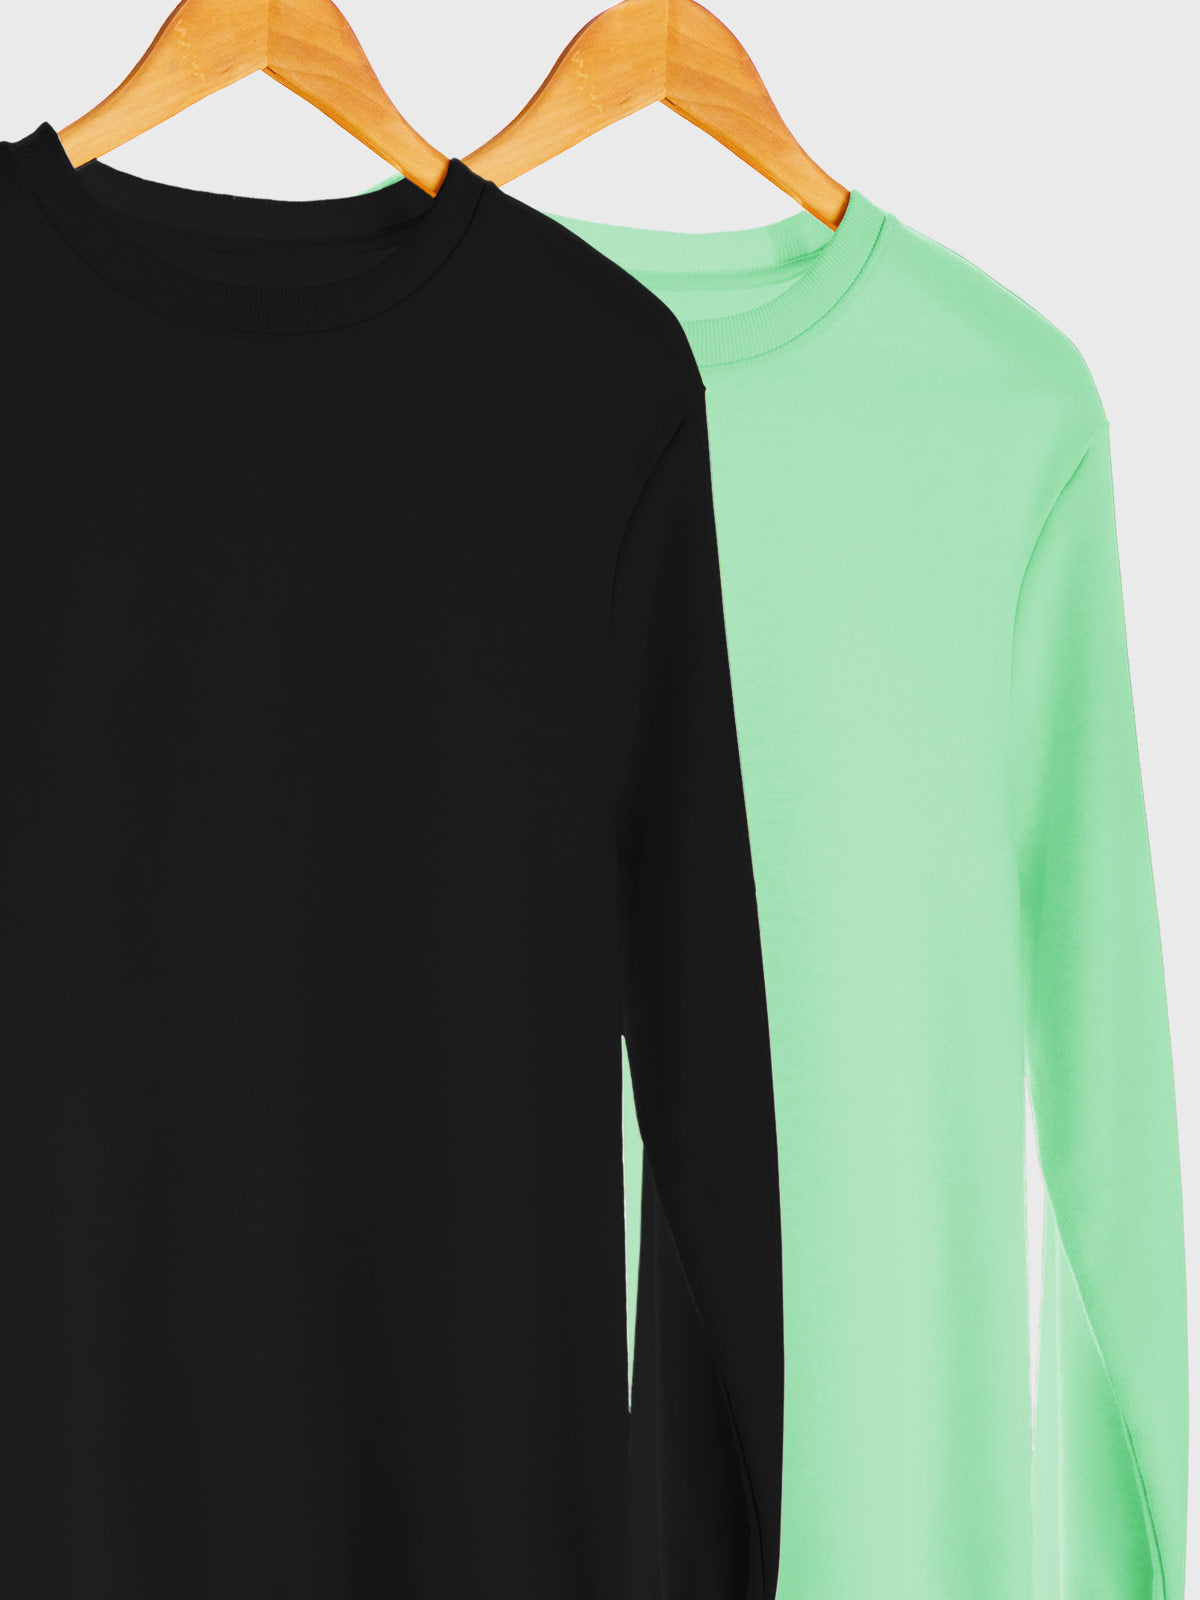 Black & Frosted Mint Unisex Plain Sweatshirt combo